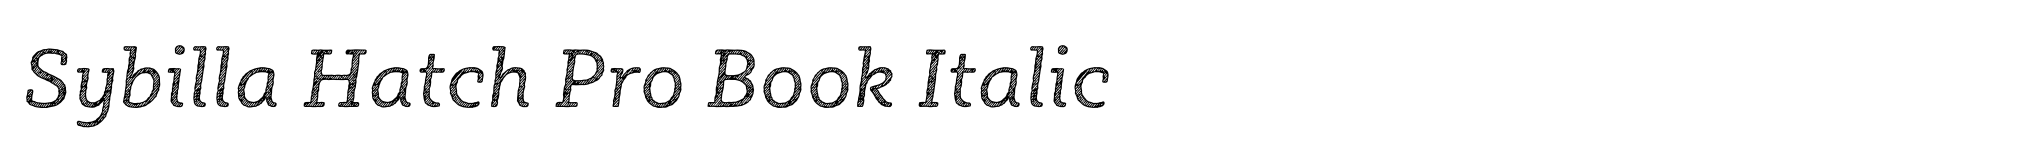 Sybilla Hatch Pro Book Italic image